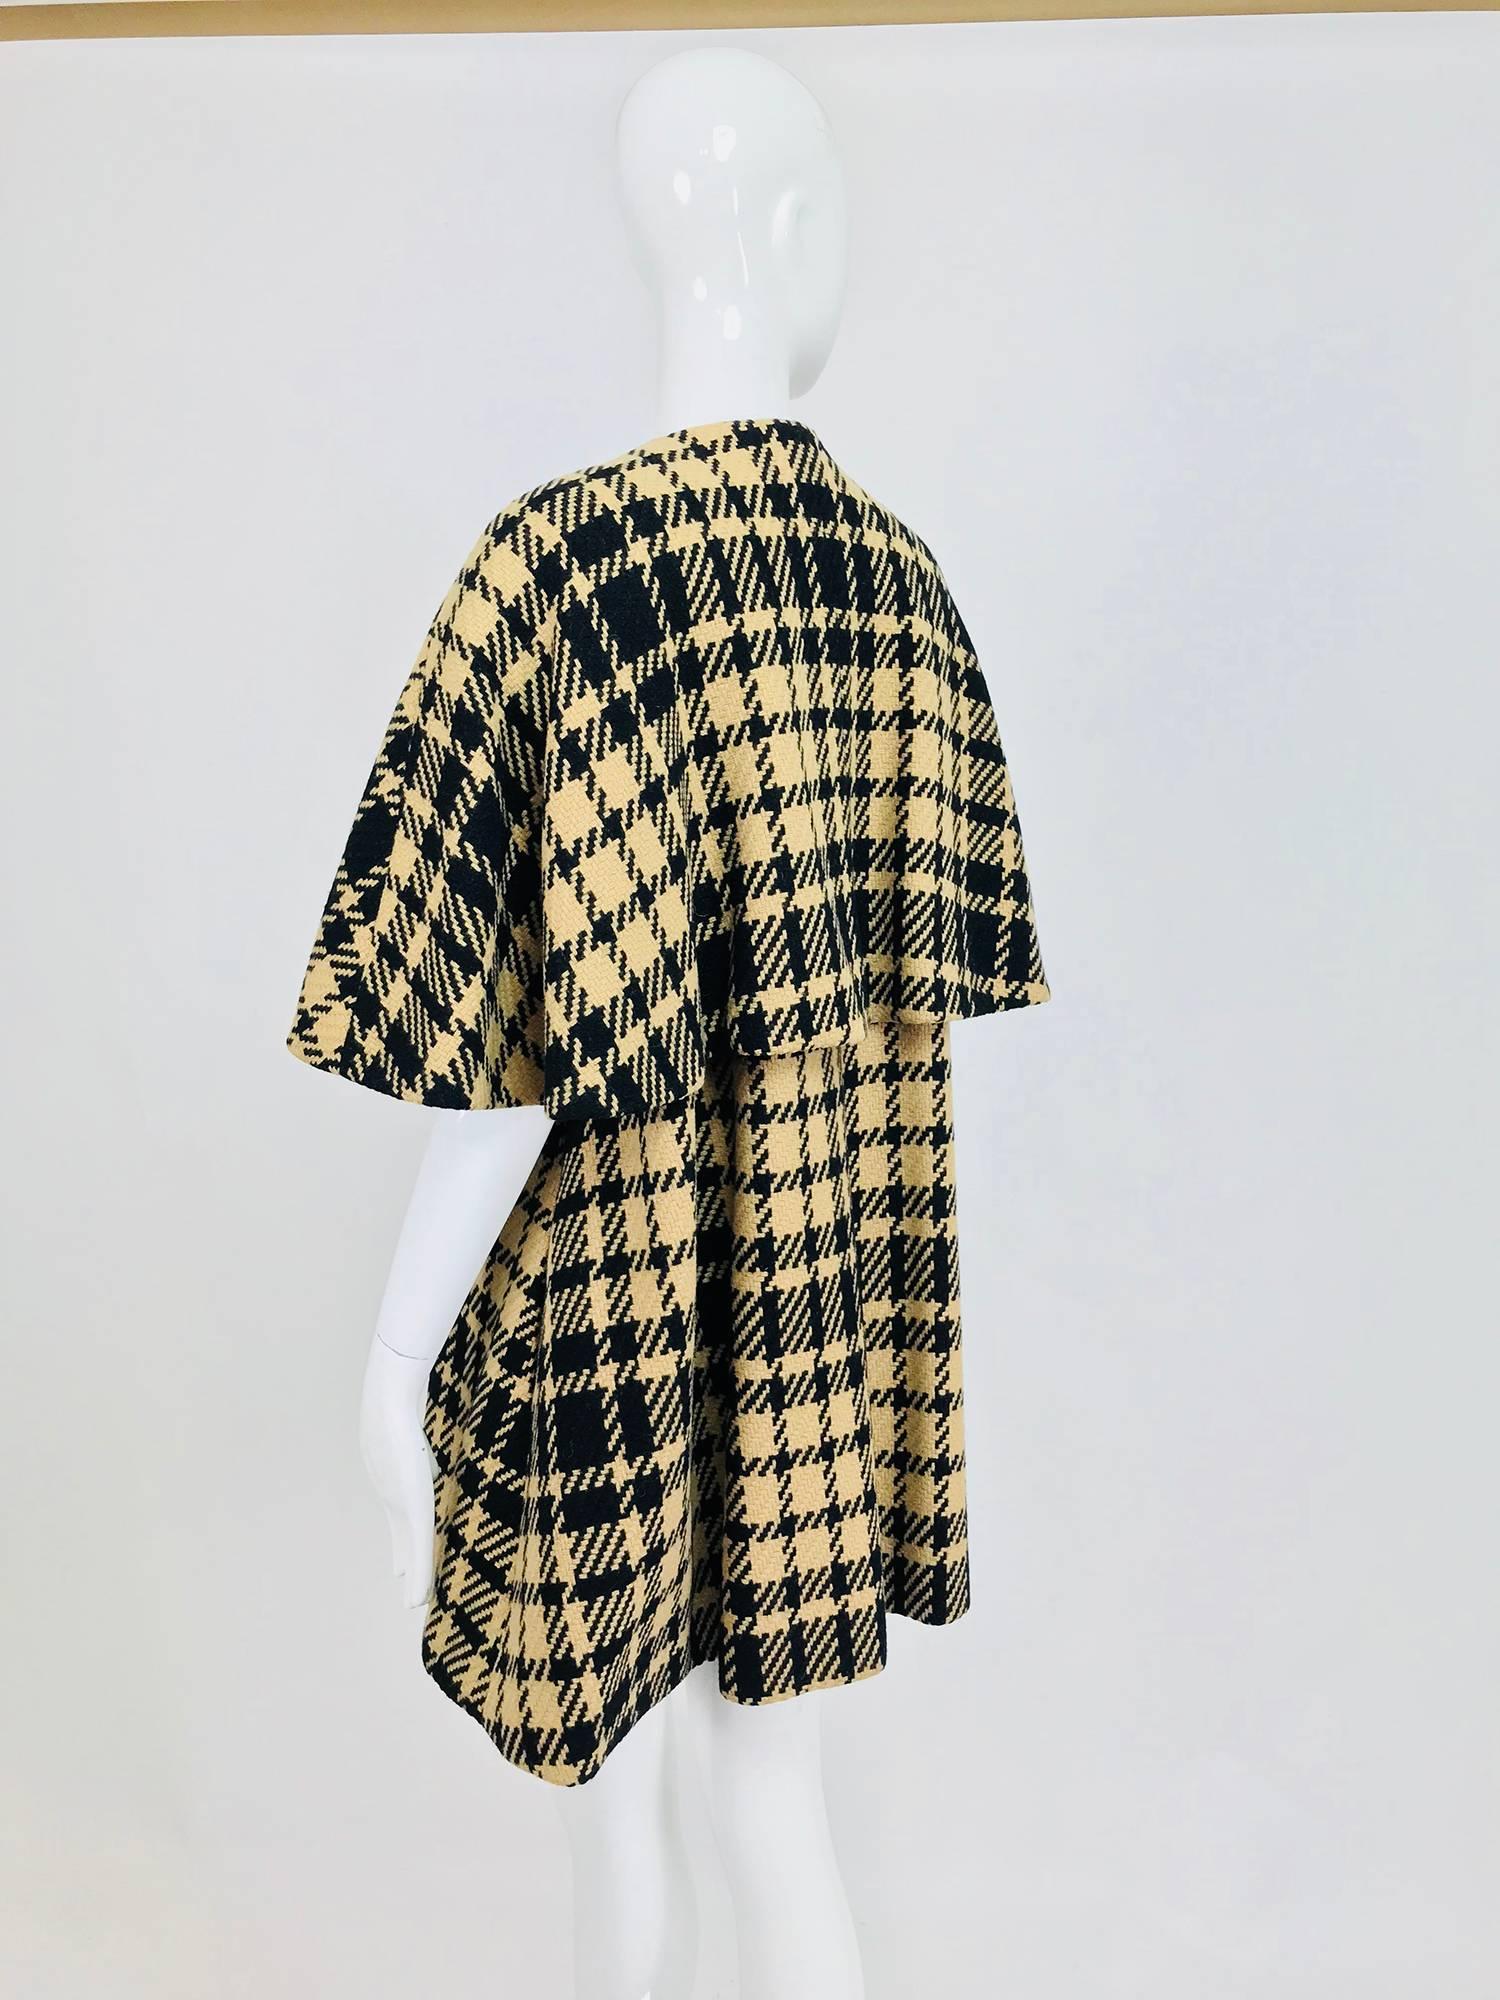 Black Rudi Gernreich vintage 1960s mod black and tan wool plaid mini cape tent coat